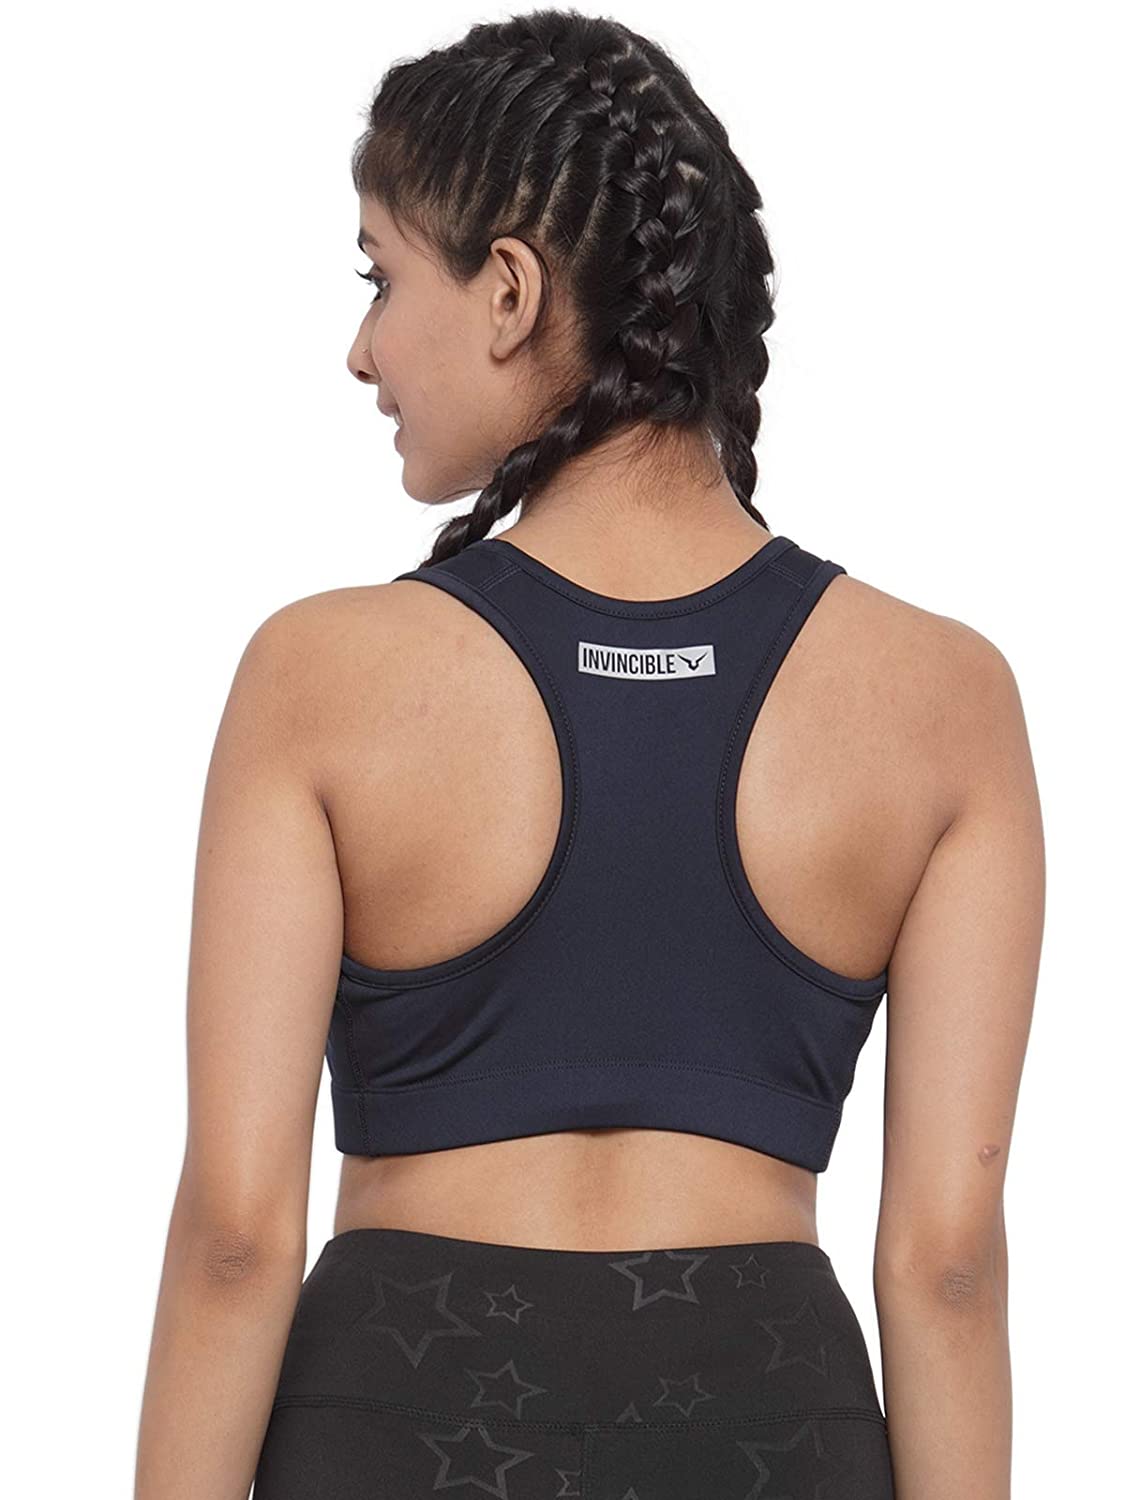 Ketyyh-chn99 Panties and Bra Sets for Women Sports Bras Seamless Underwear  2026 Benefits Super Soft Wireless Lightly Lined Comfort Bra Black,M 